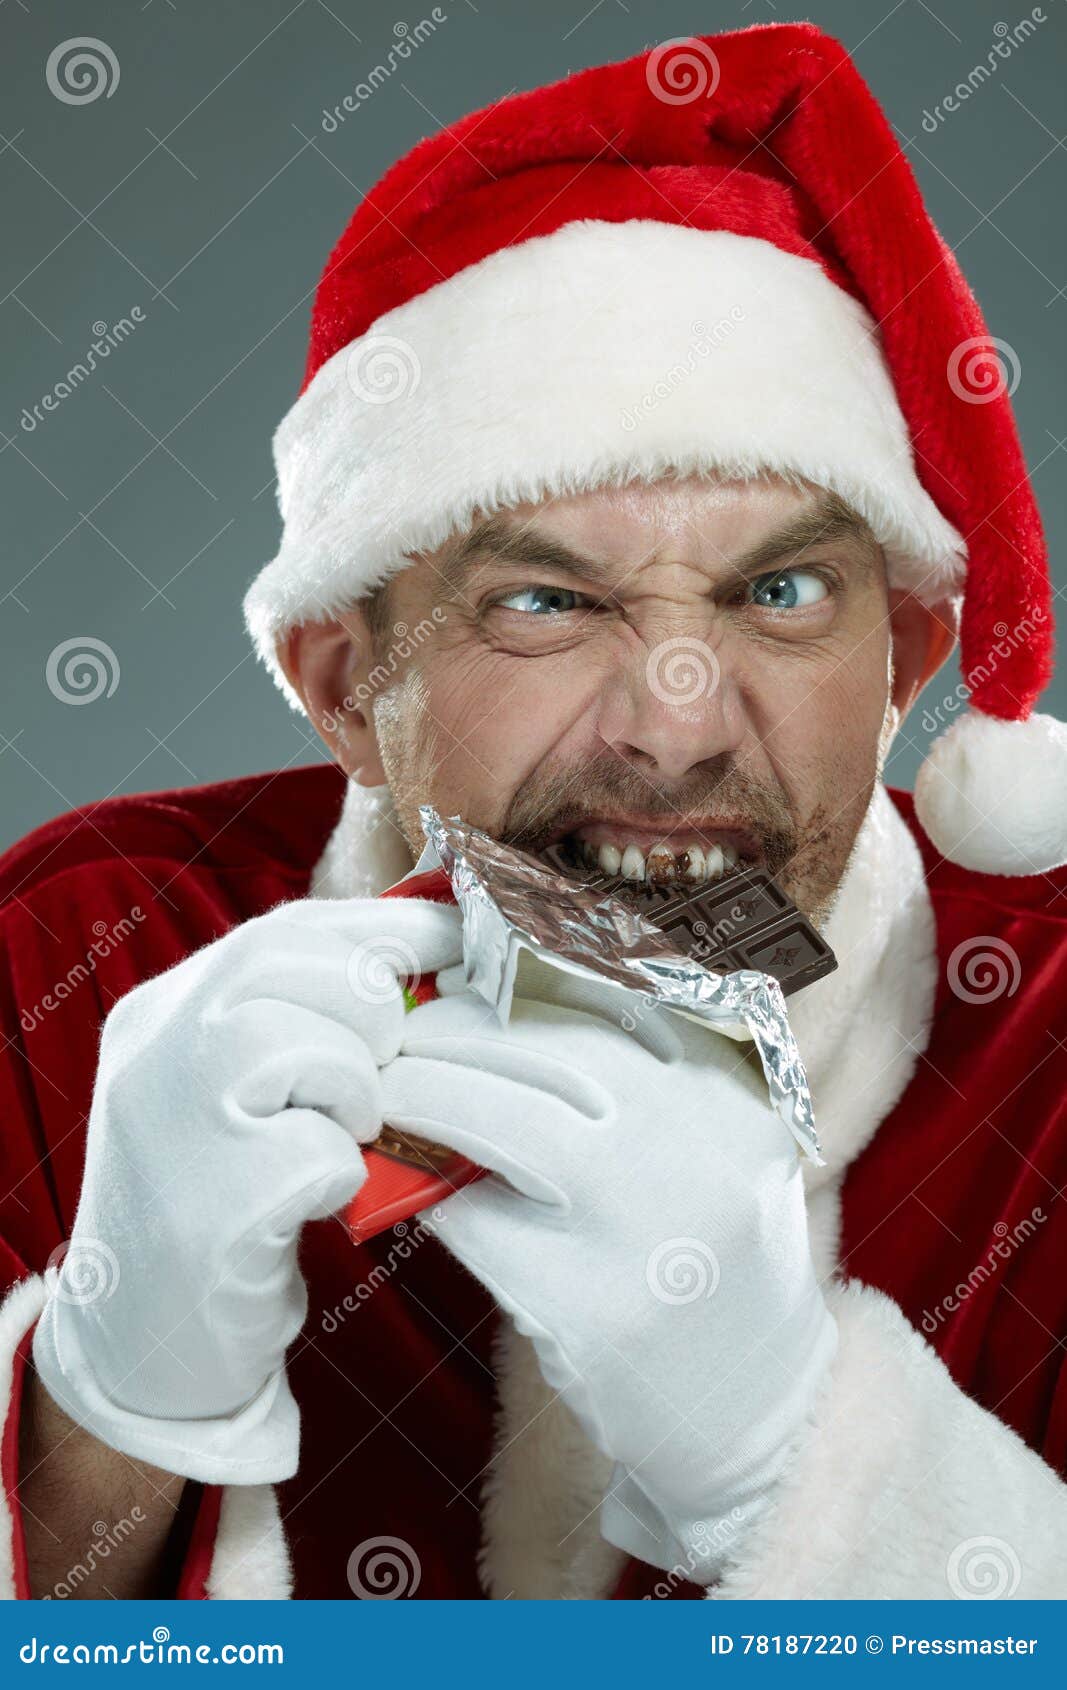 Christmas greed stock photo. Image of aggressive, gray - 78187220